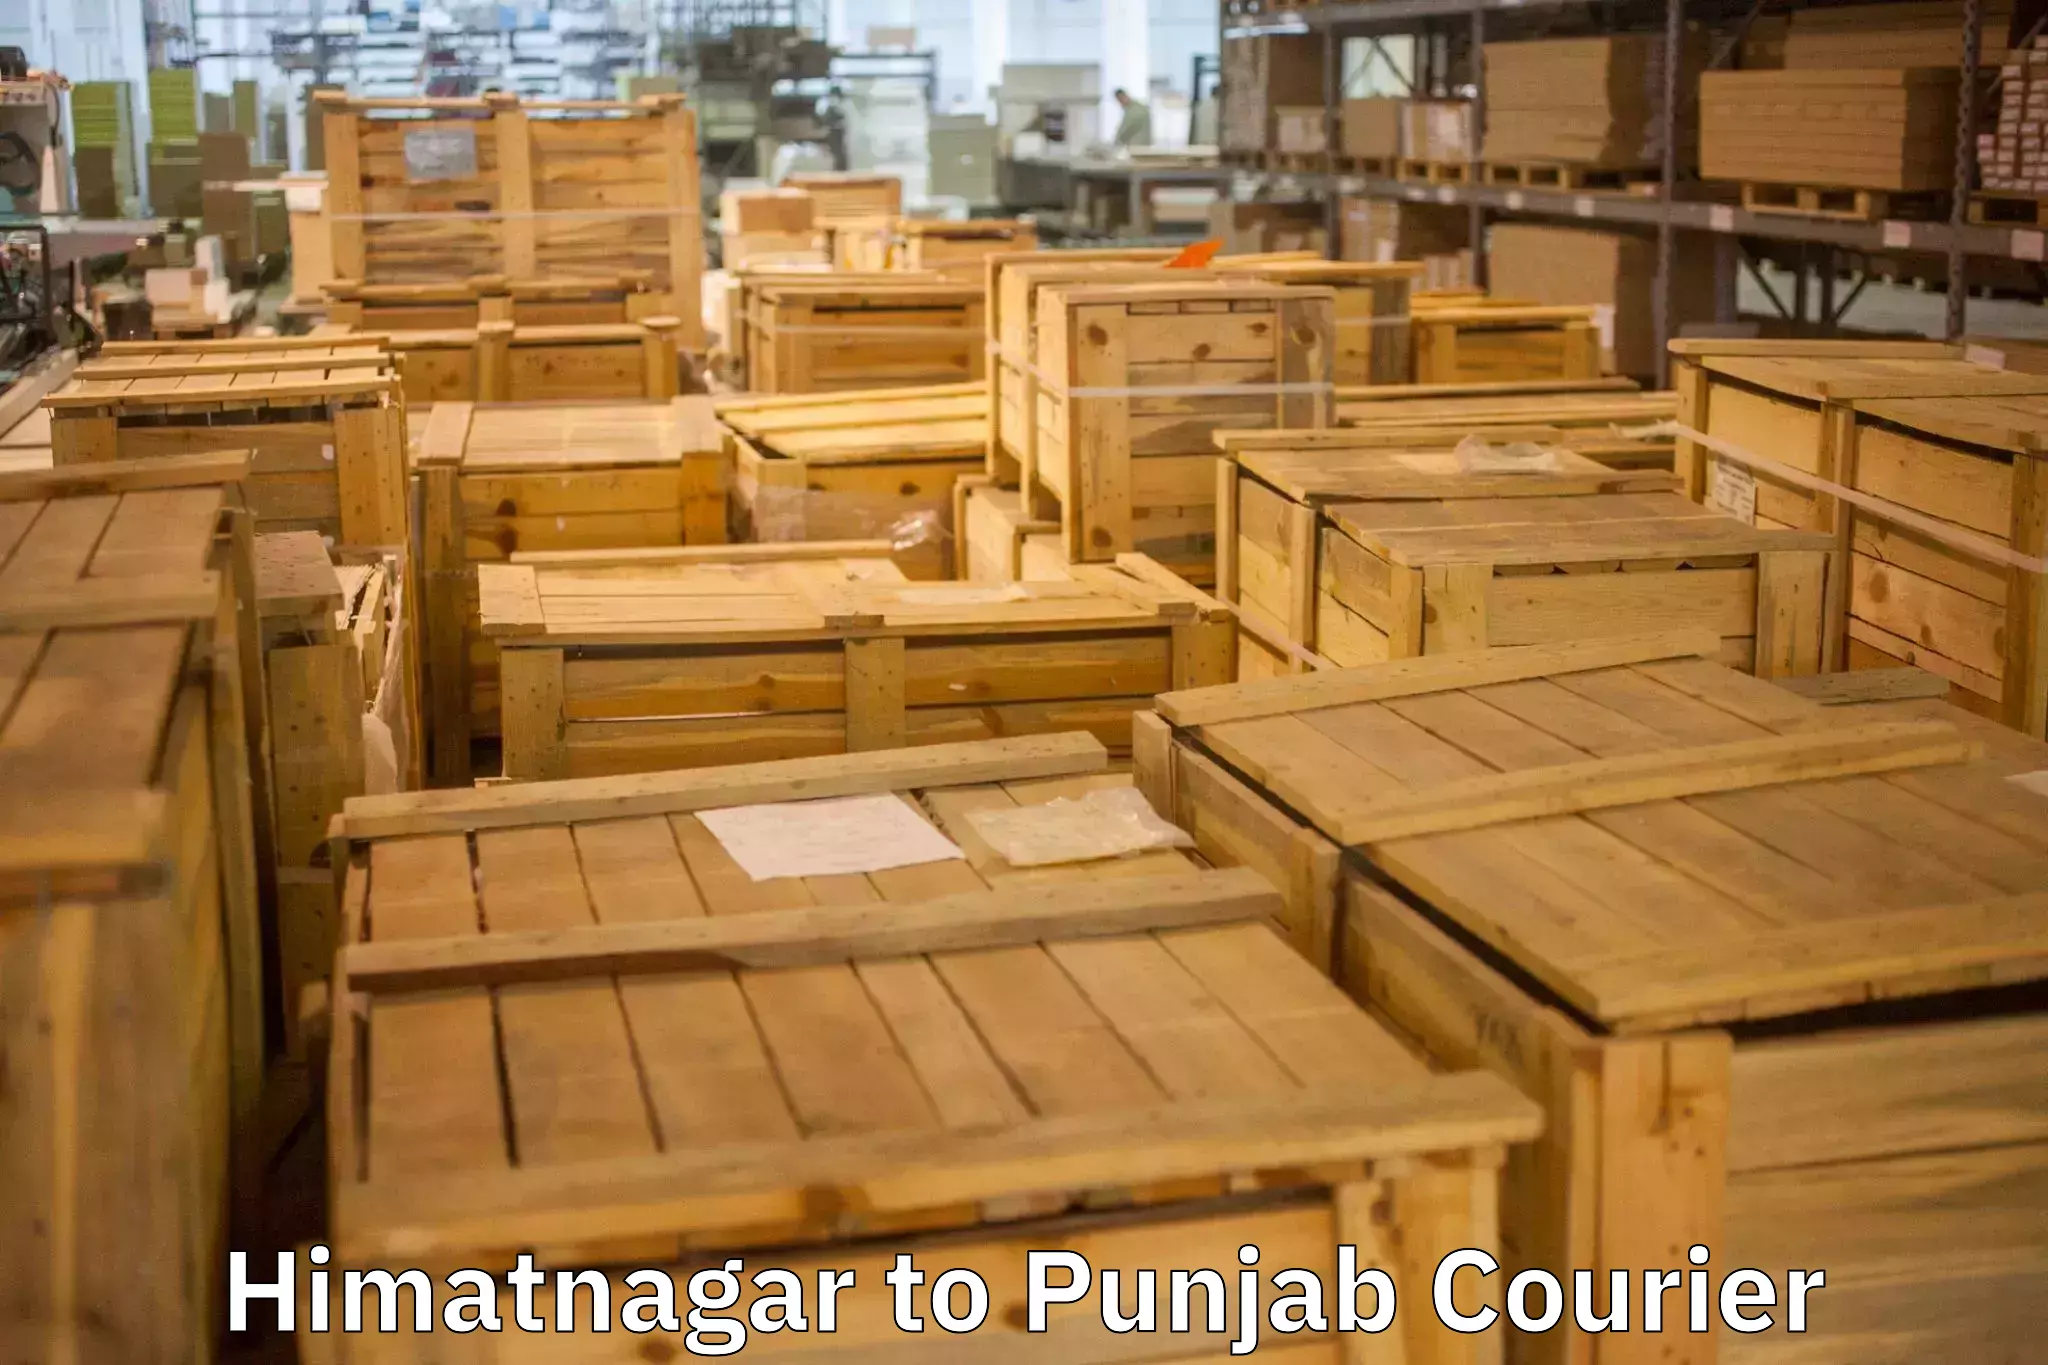 Furniture relocation experts Himatnagar to Amritsar